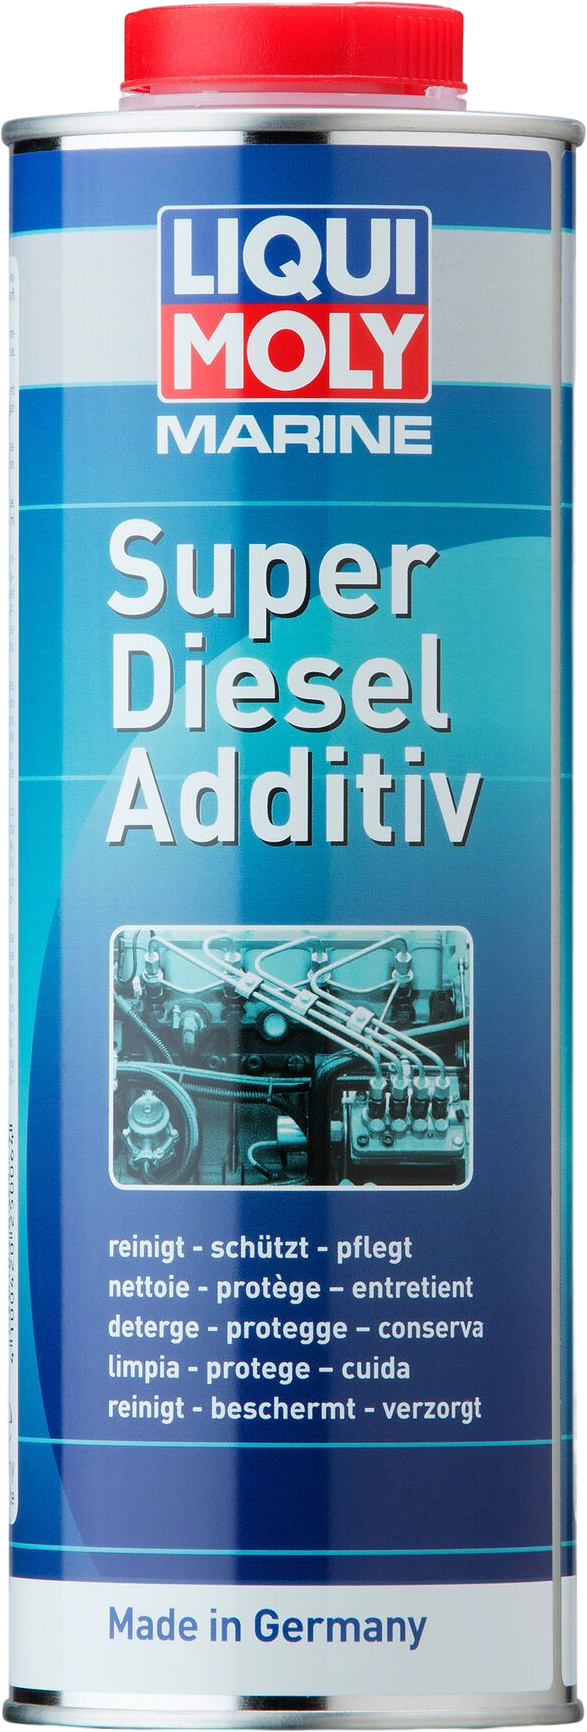 Liqui Moly Marine Super Diesel Additiv, 1 lt